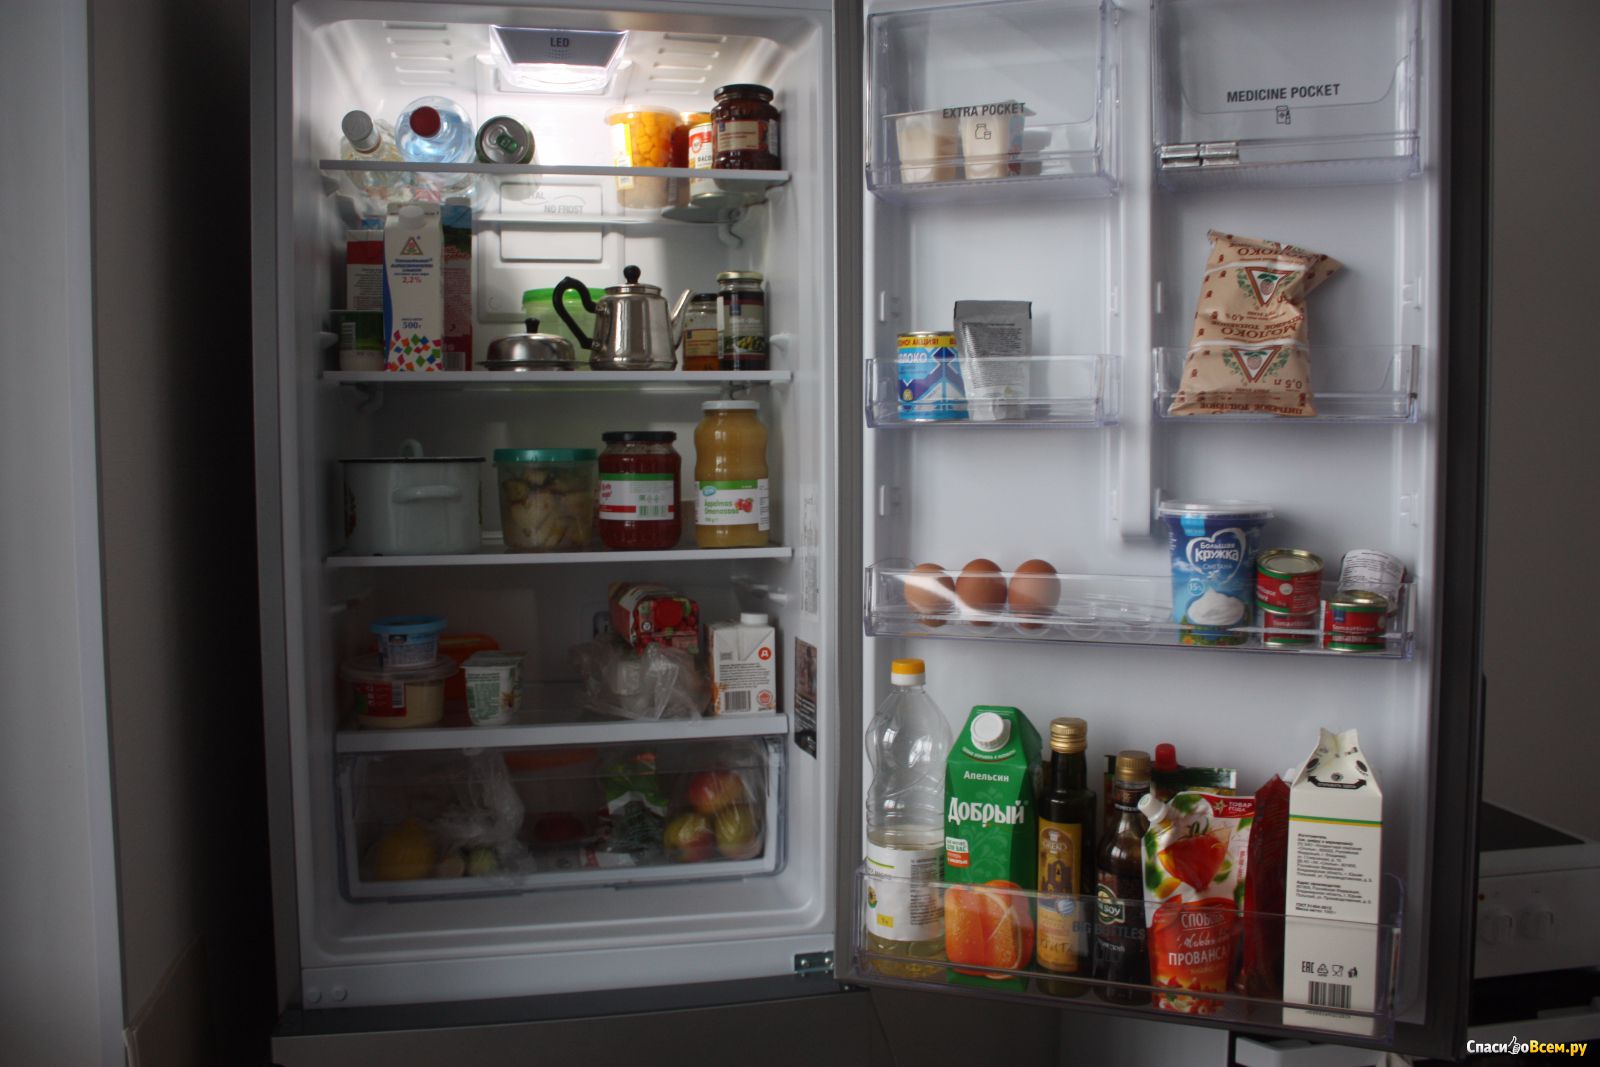 Ariston hf холодильник